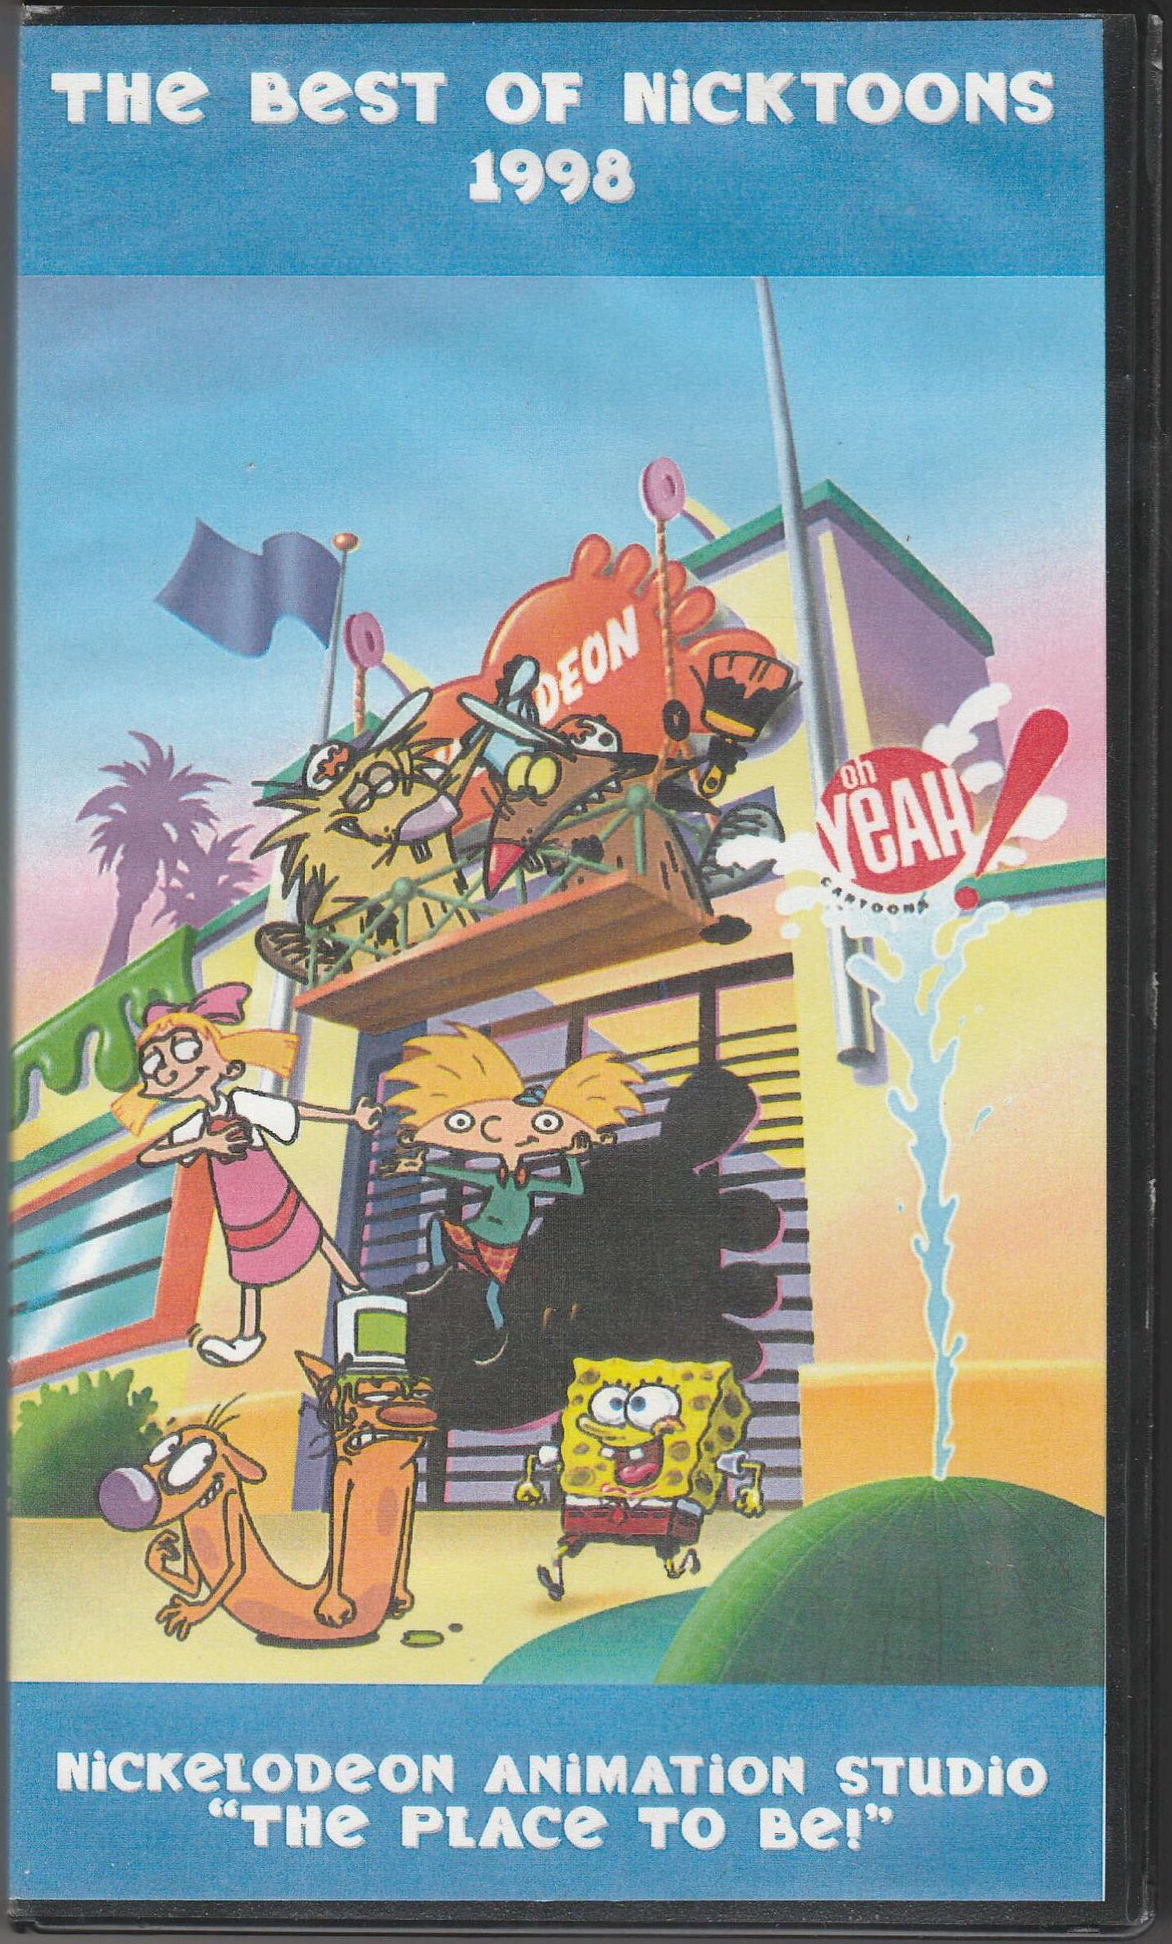 The Best of Nicktoons 1998 | Encyclopedia SpongeBobia | Fandom